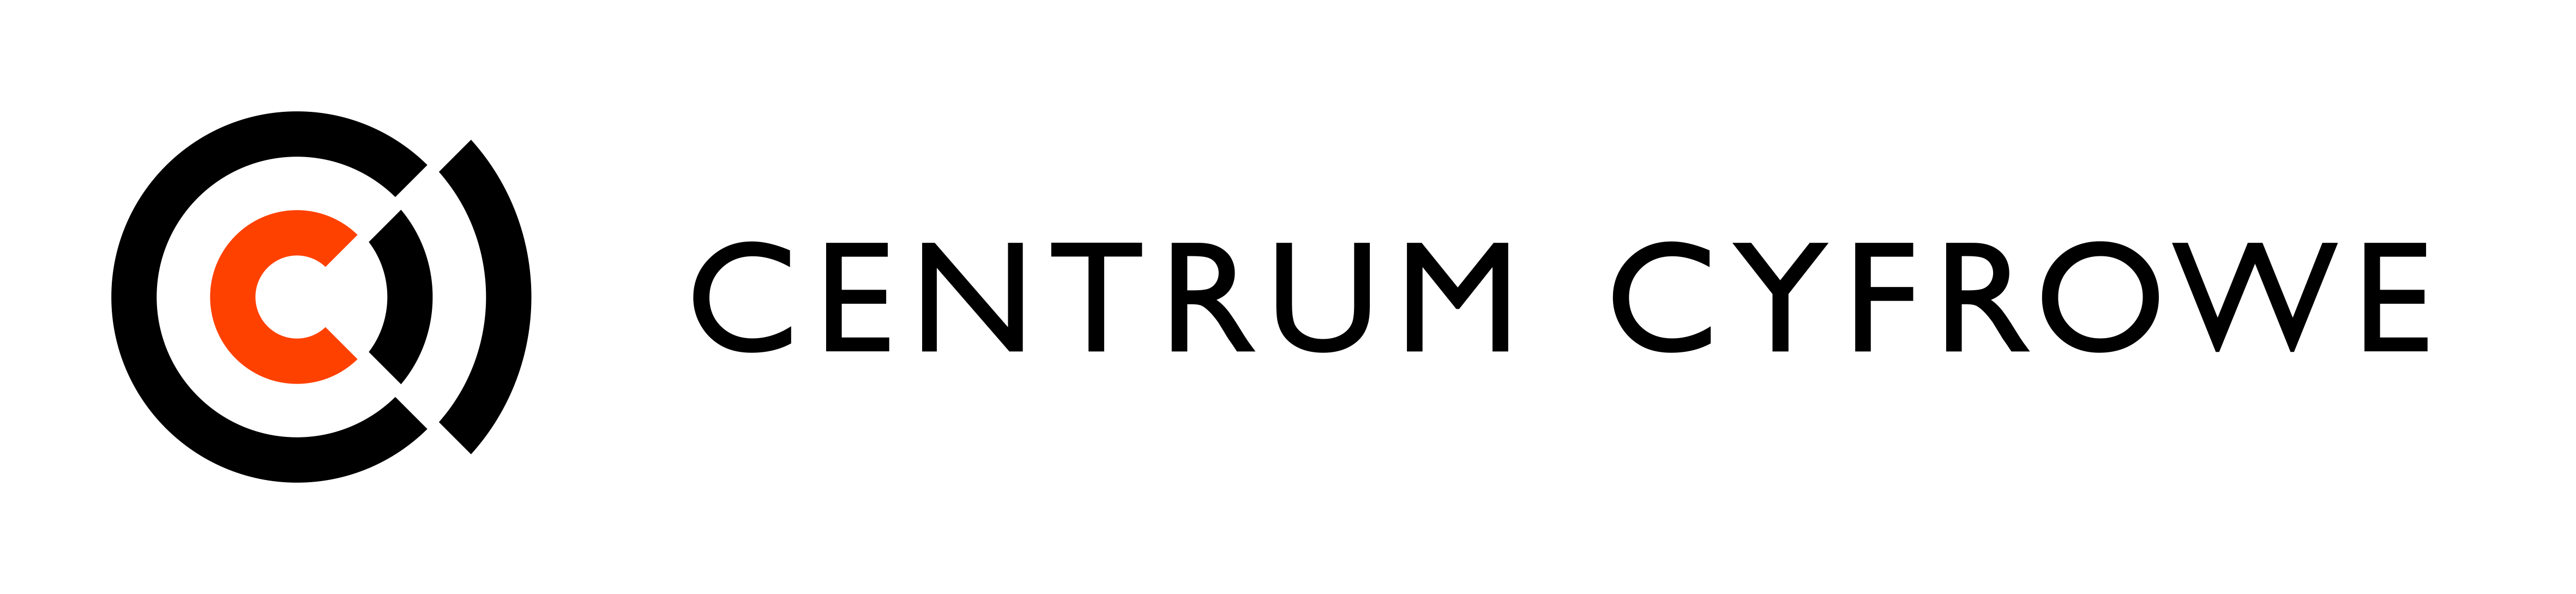 Centrum Cyfrowe Logo